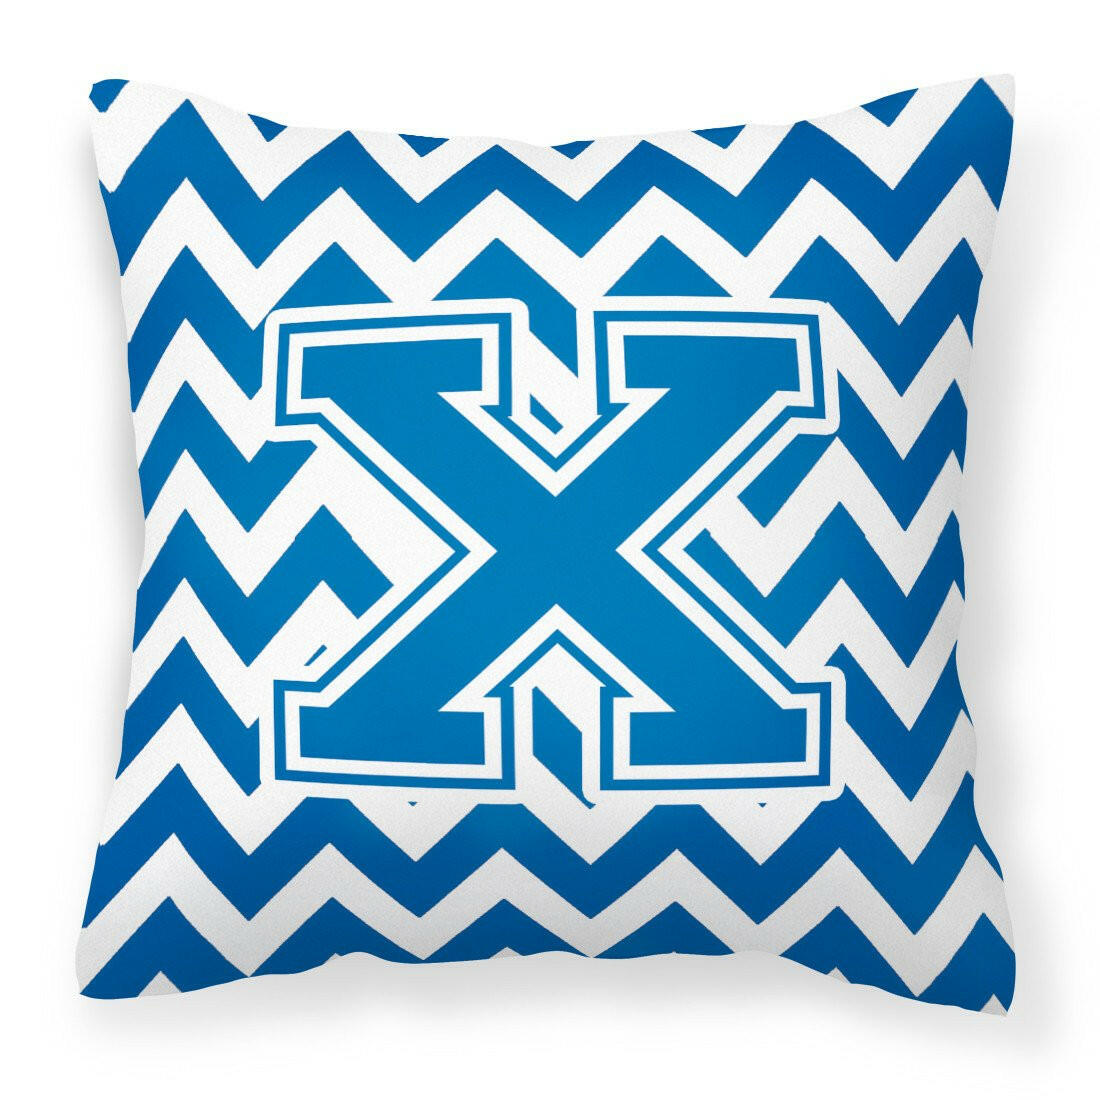 Letter X Chevron Blue and White Fabric Decorative Pillow CJ1056-XPW1414 by Caroline's Treasures